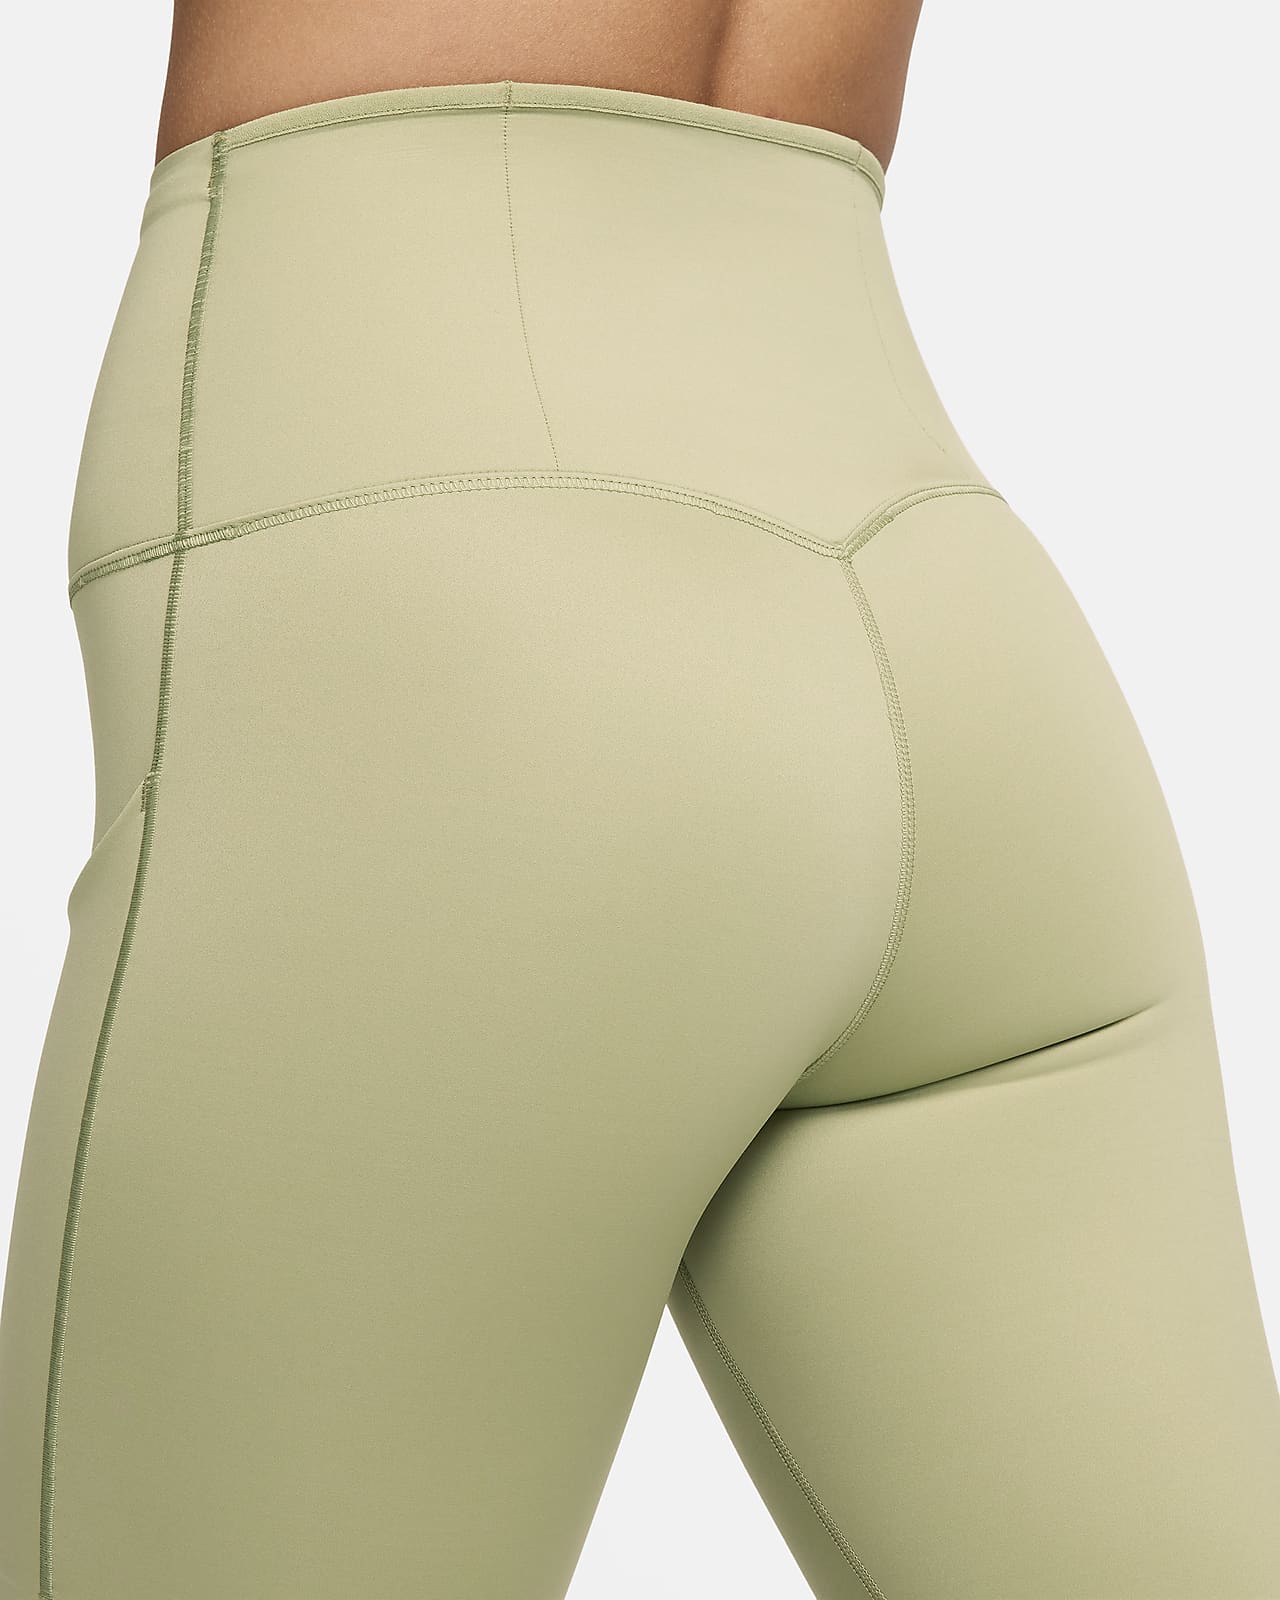 go womens firm support high waisted 7 8 leggings with pockets 0JLlkk